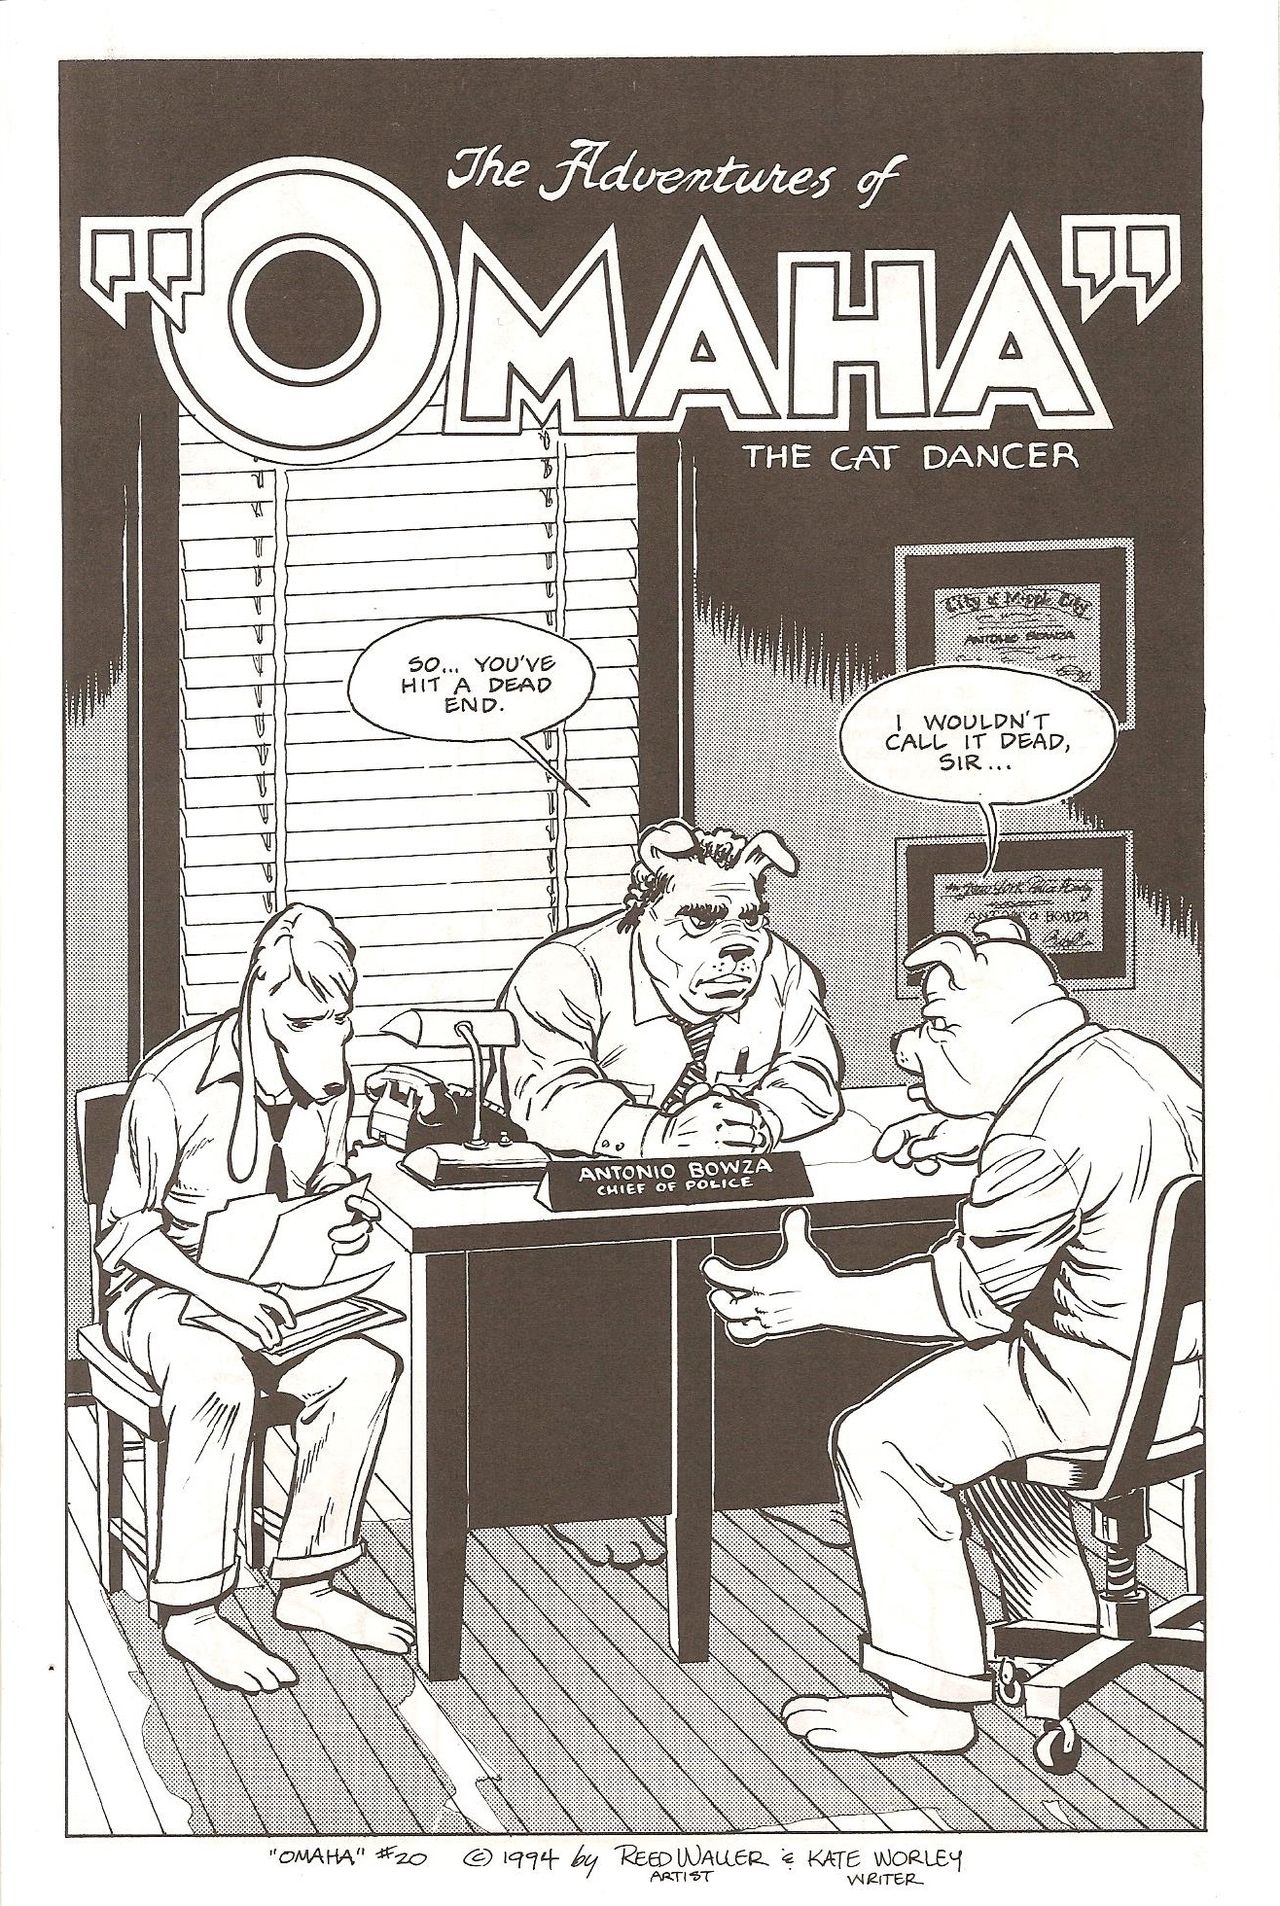 Omaha no. 20 2